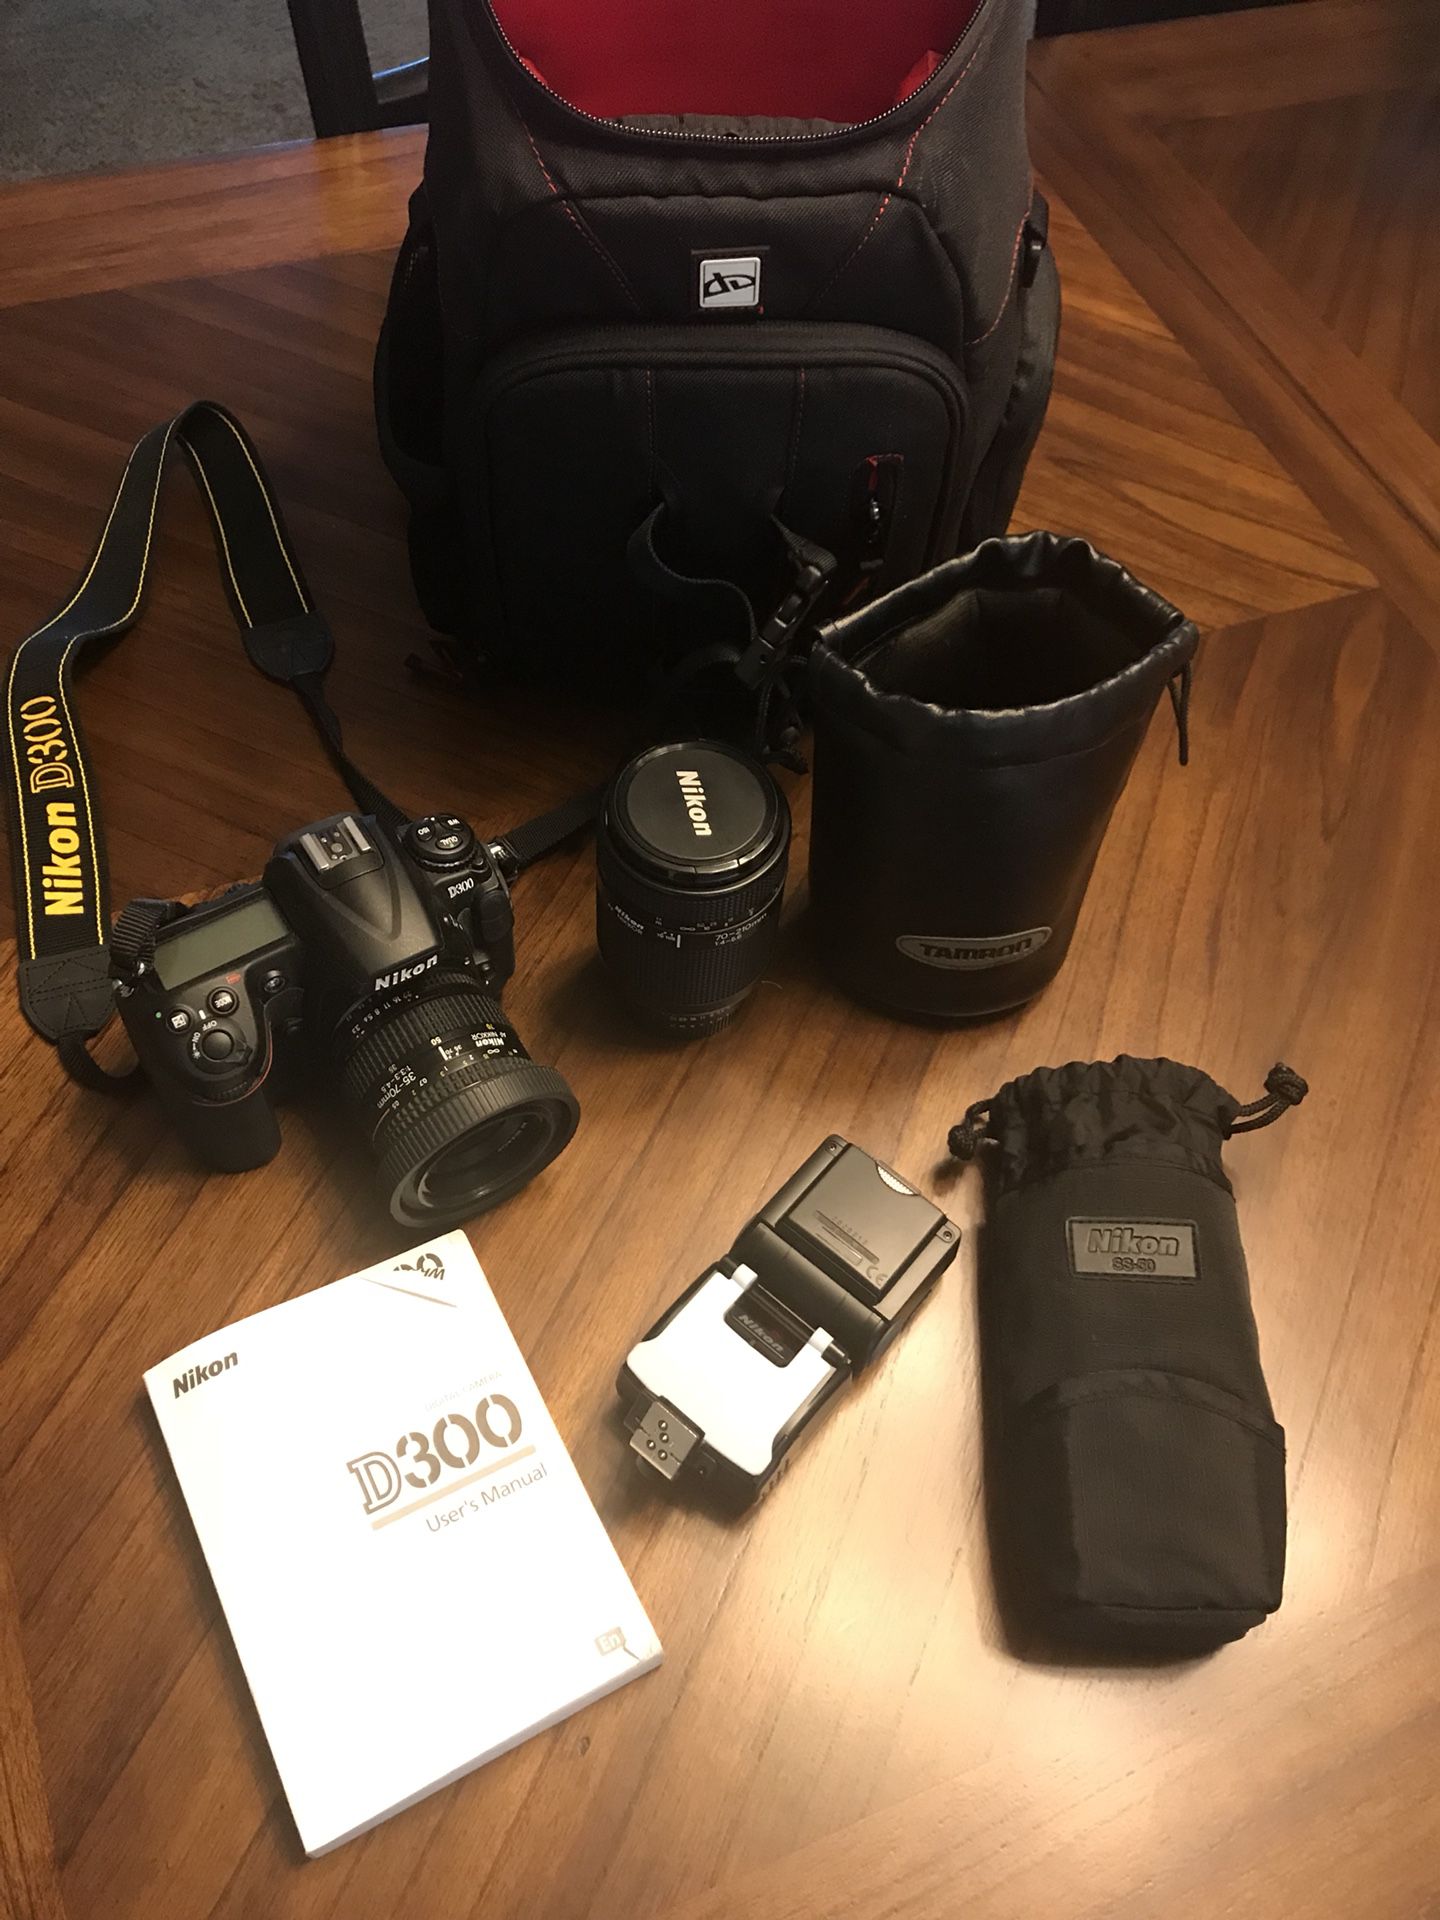 Nikon D300 with 3 lenses, flash and bag